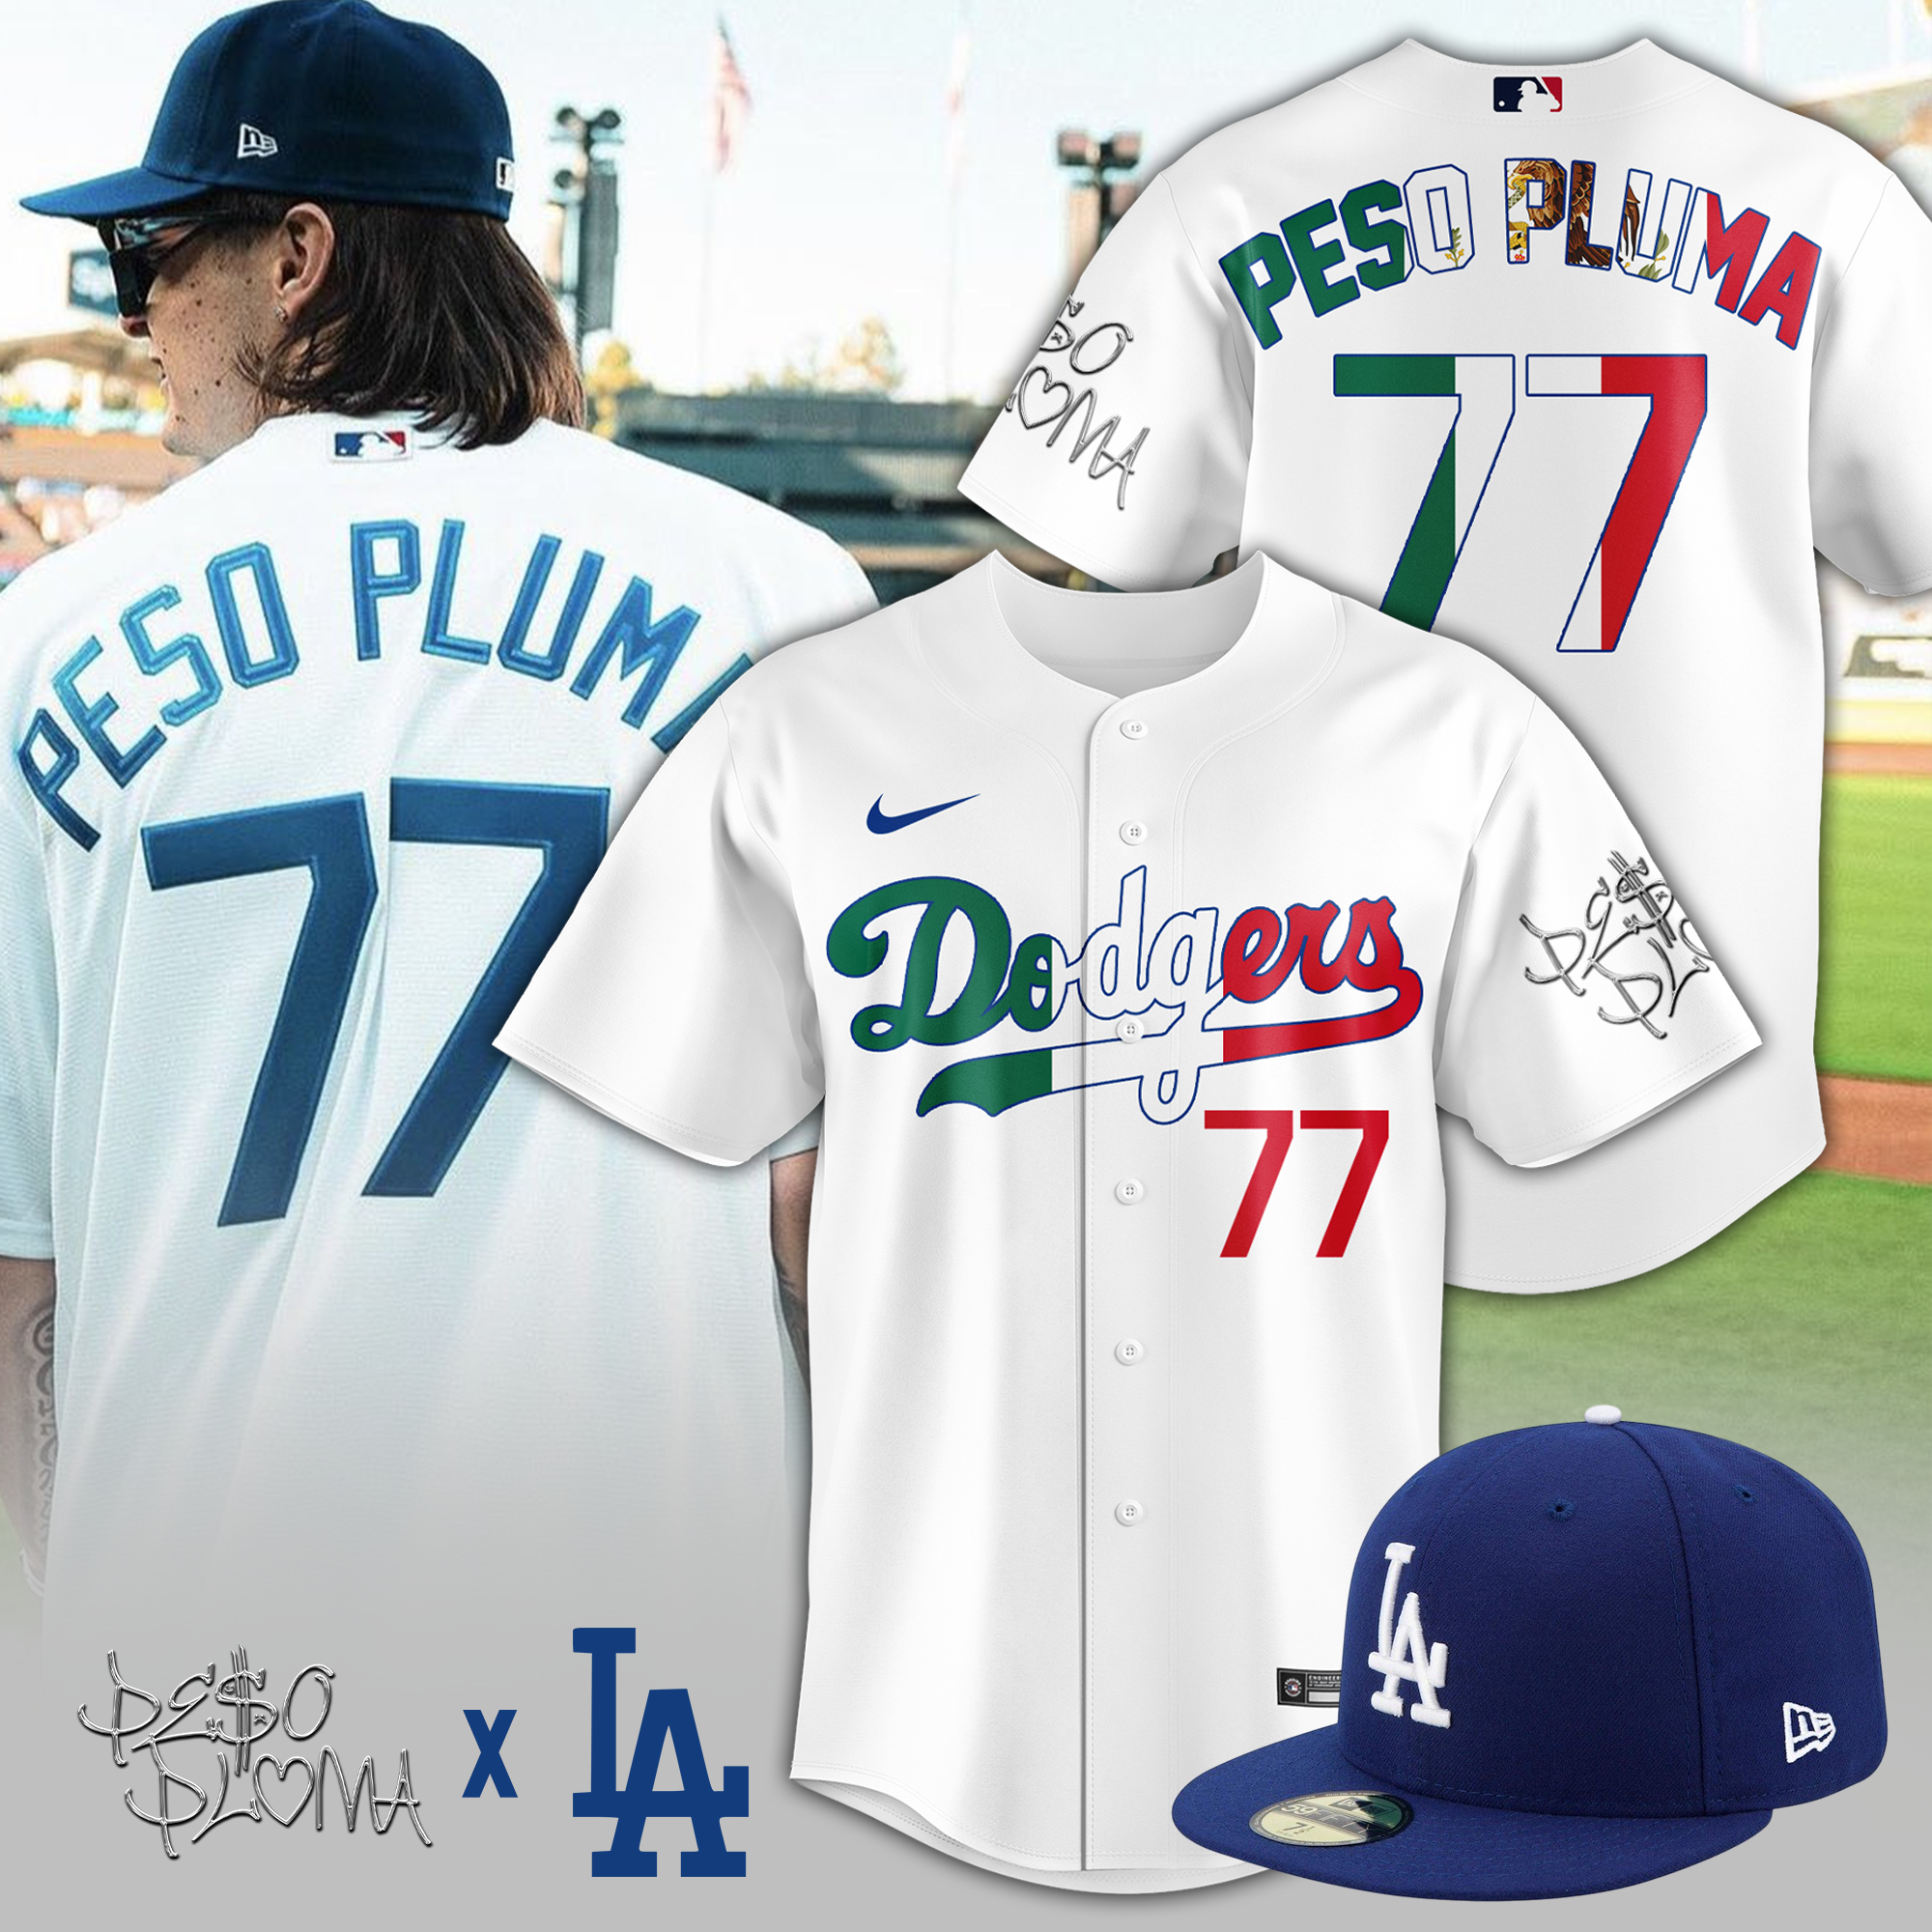 Los Angeles Dodgers Peso Pluma White Jersey